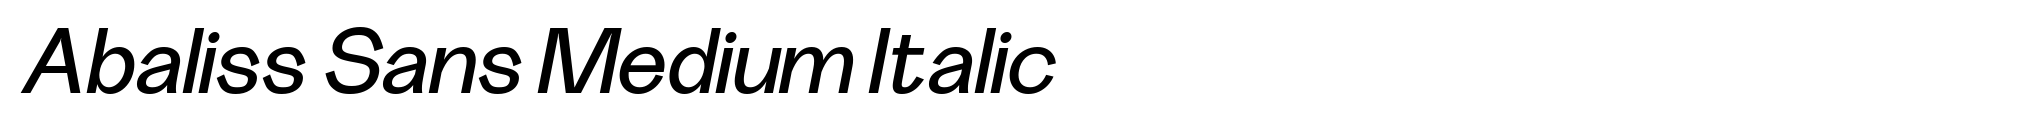 Abaliss Sans Medium Italic image